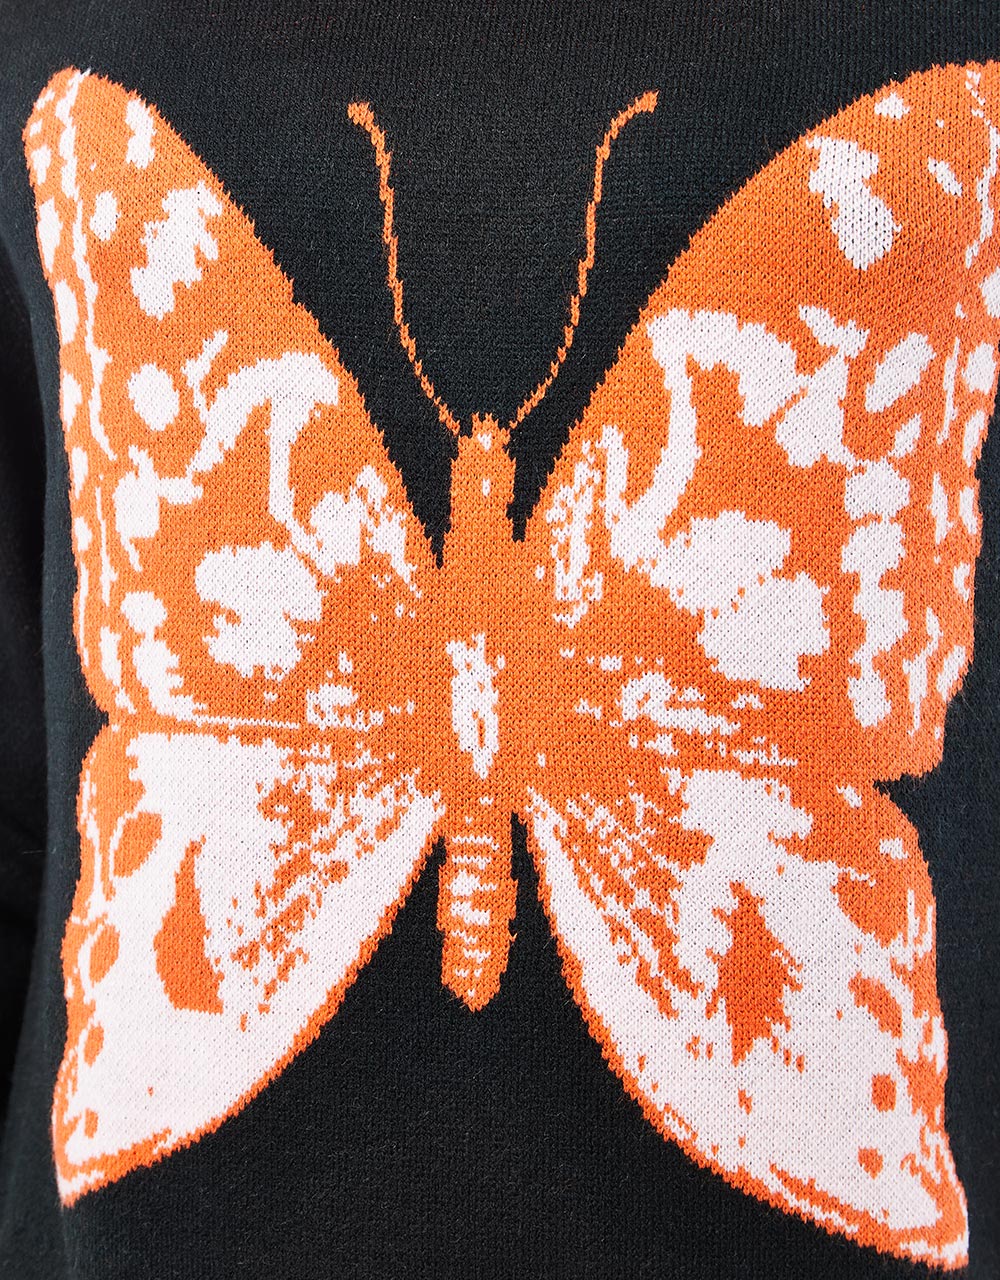 Butter Goods Butterfly Knit Sweater - Black